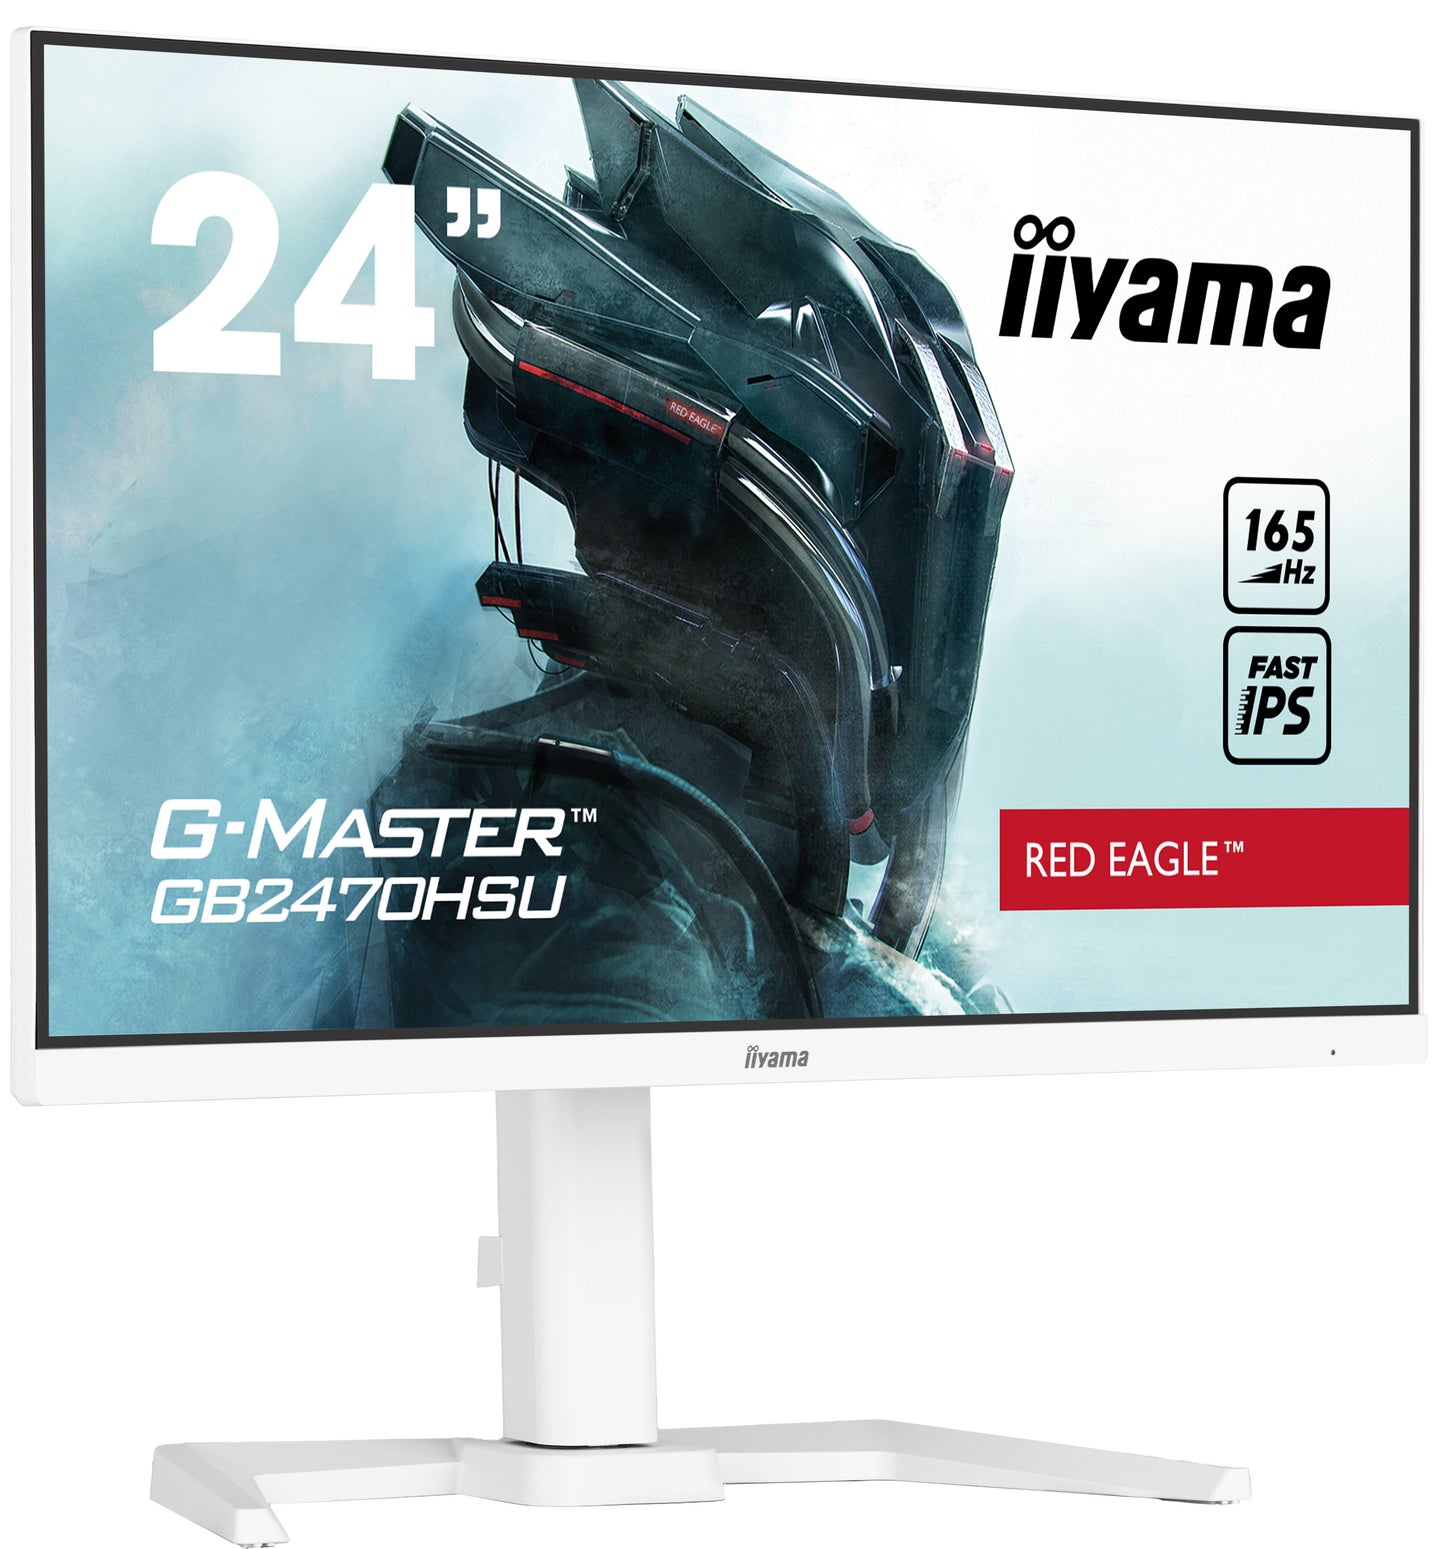 iiyama G-Master GB2470HSU-W5 24" Red Eagle Full HD IPS Gaming Monitor in White